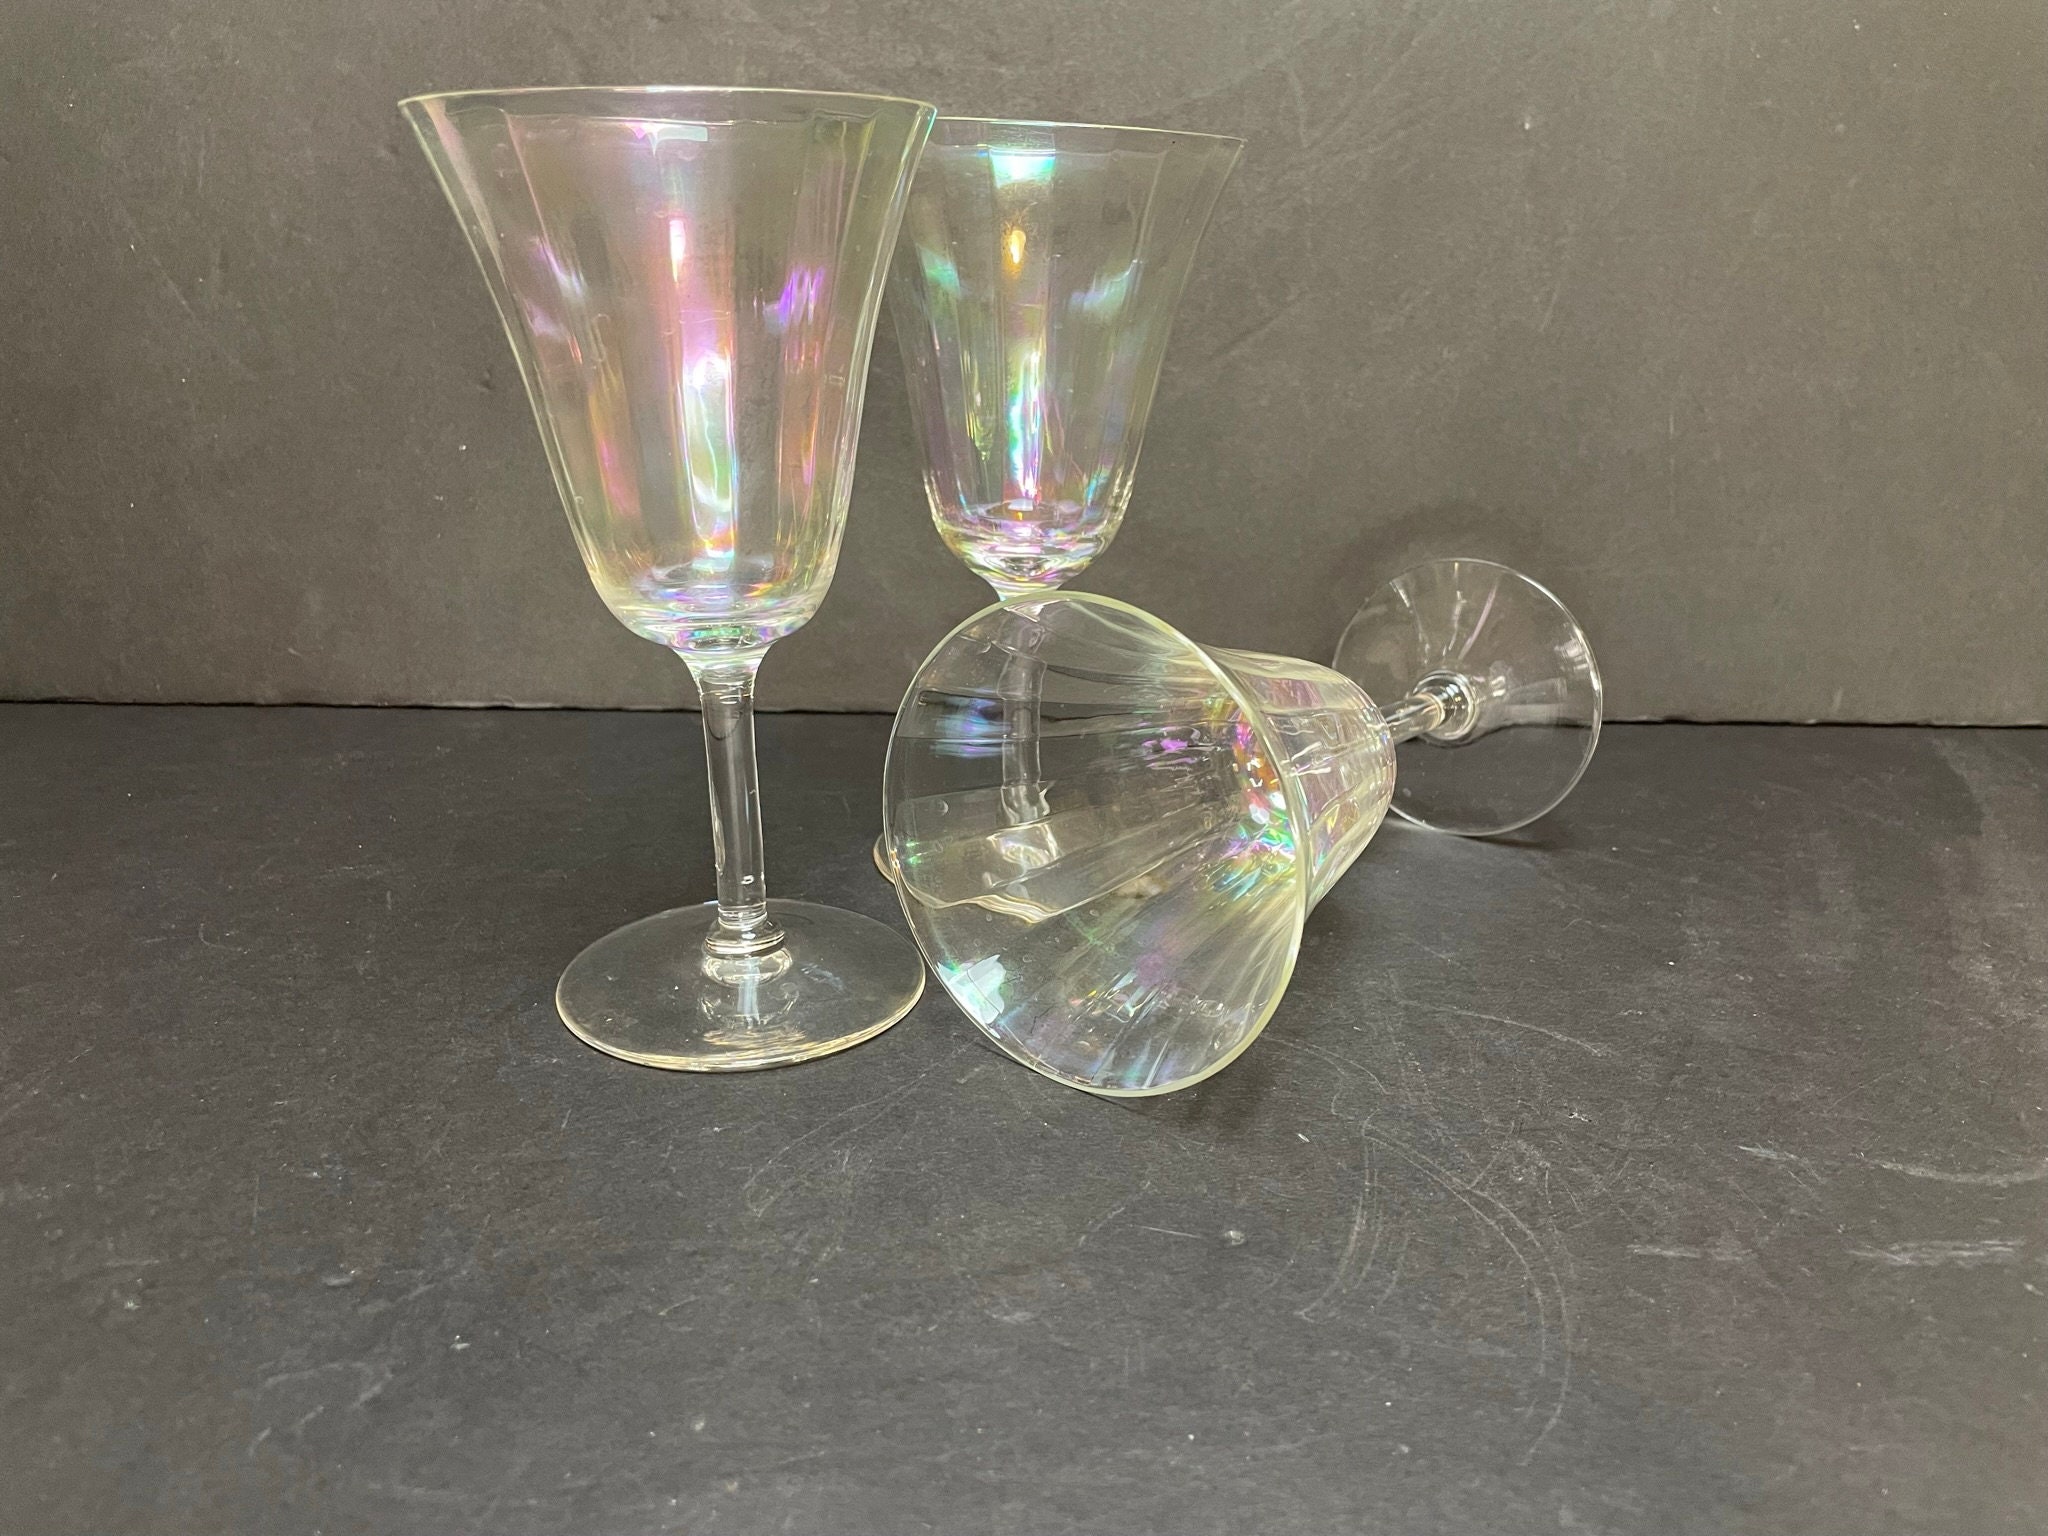 Iridescent Large Wine Glasses Set - The Wine Savant Whimsy and Nostalgia Large R